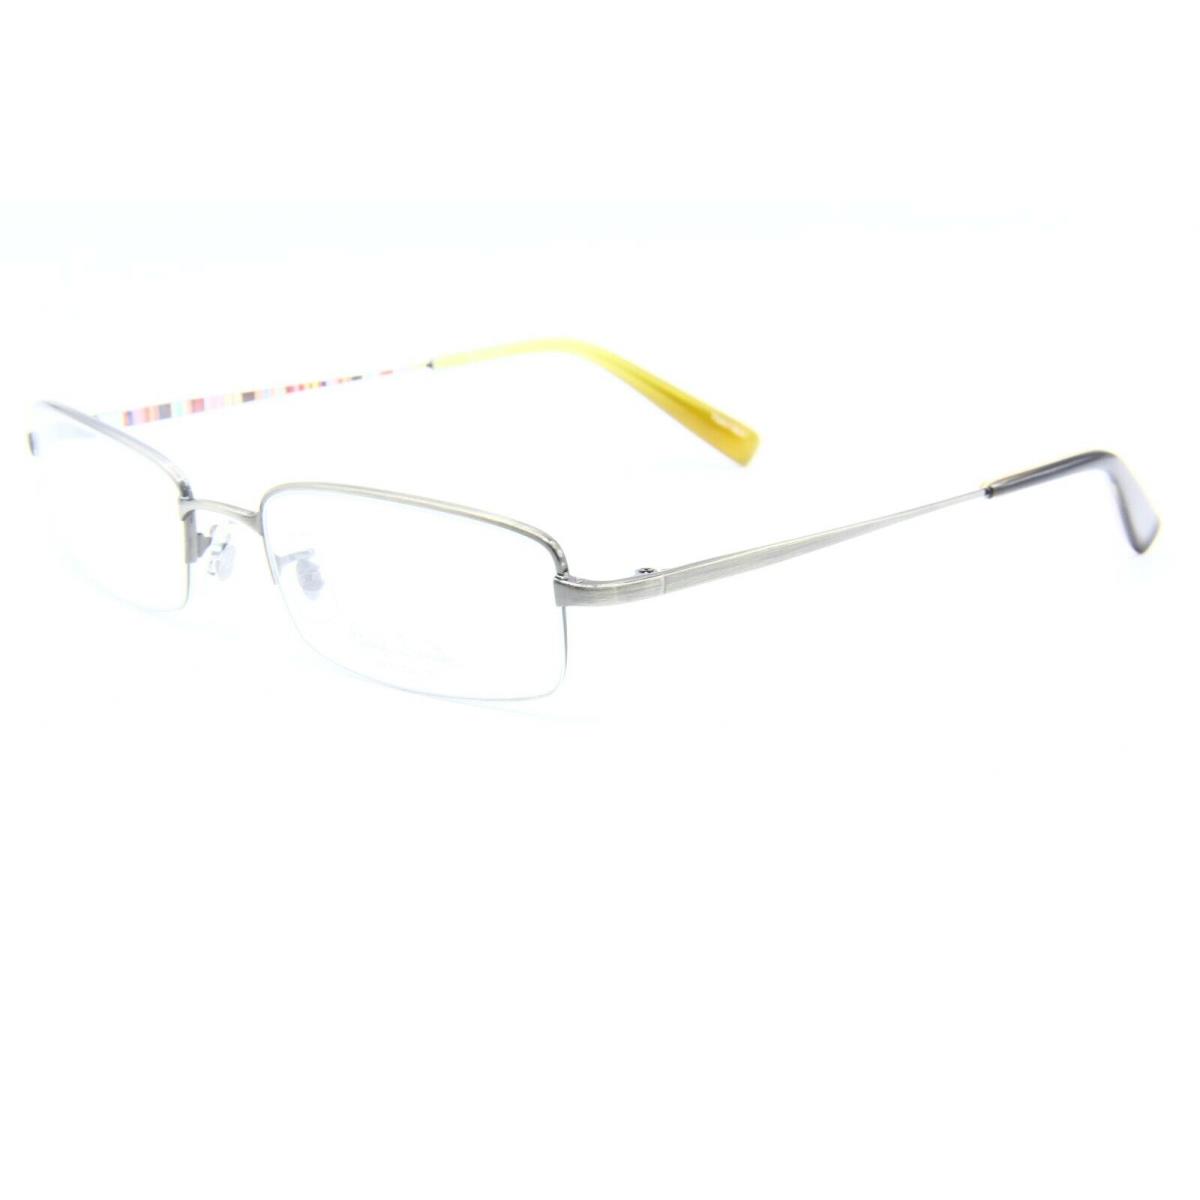 Paul Smith PS-1004 L Gray Eyeglasses Frame RX 52-17